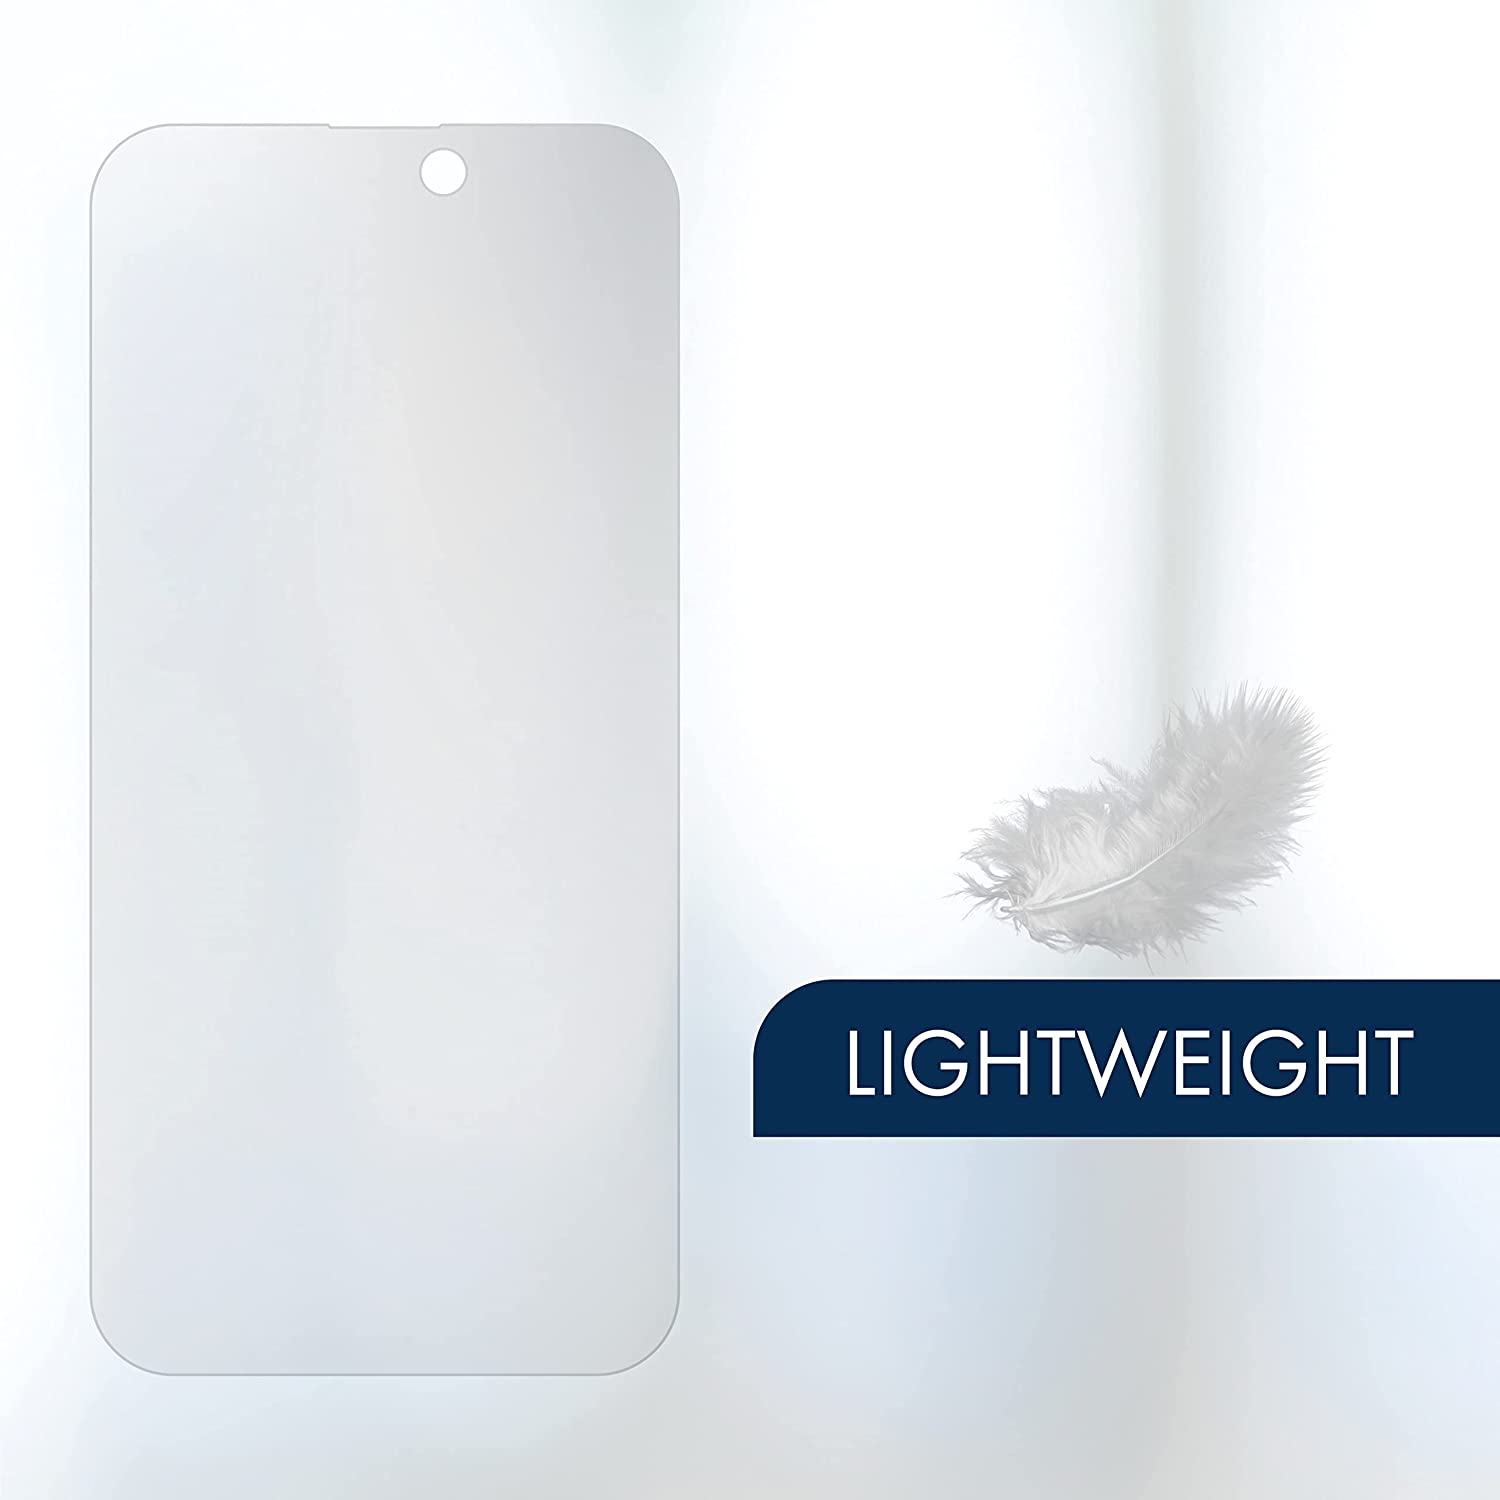 OnePlus 7 Pro Screen Protector + White Carbon Fiber Skin